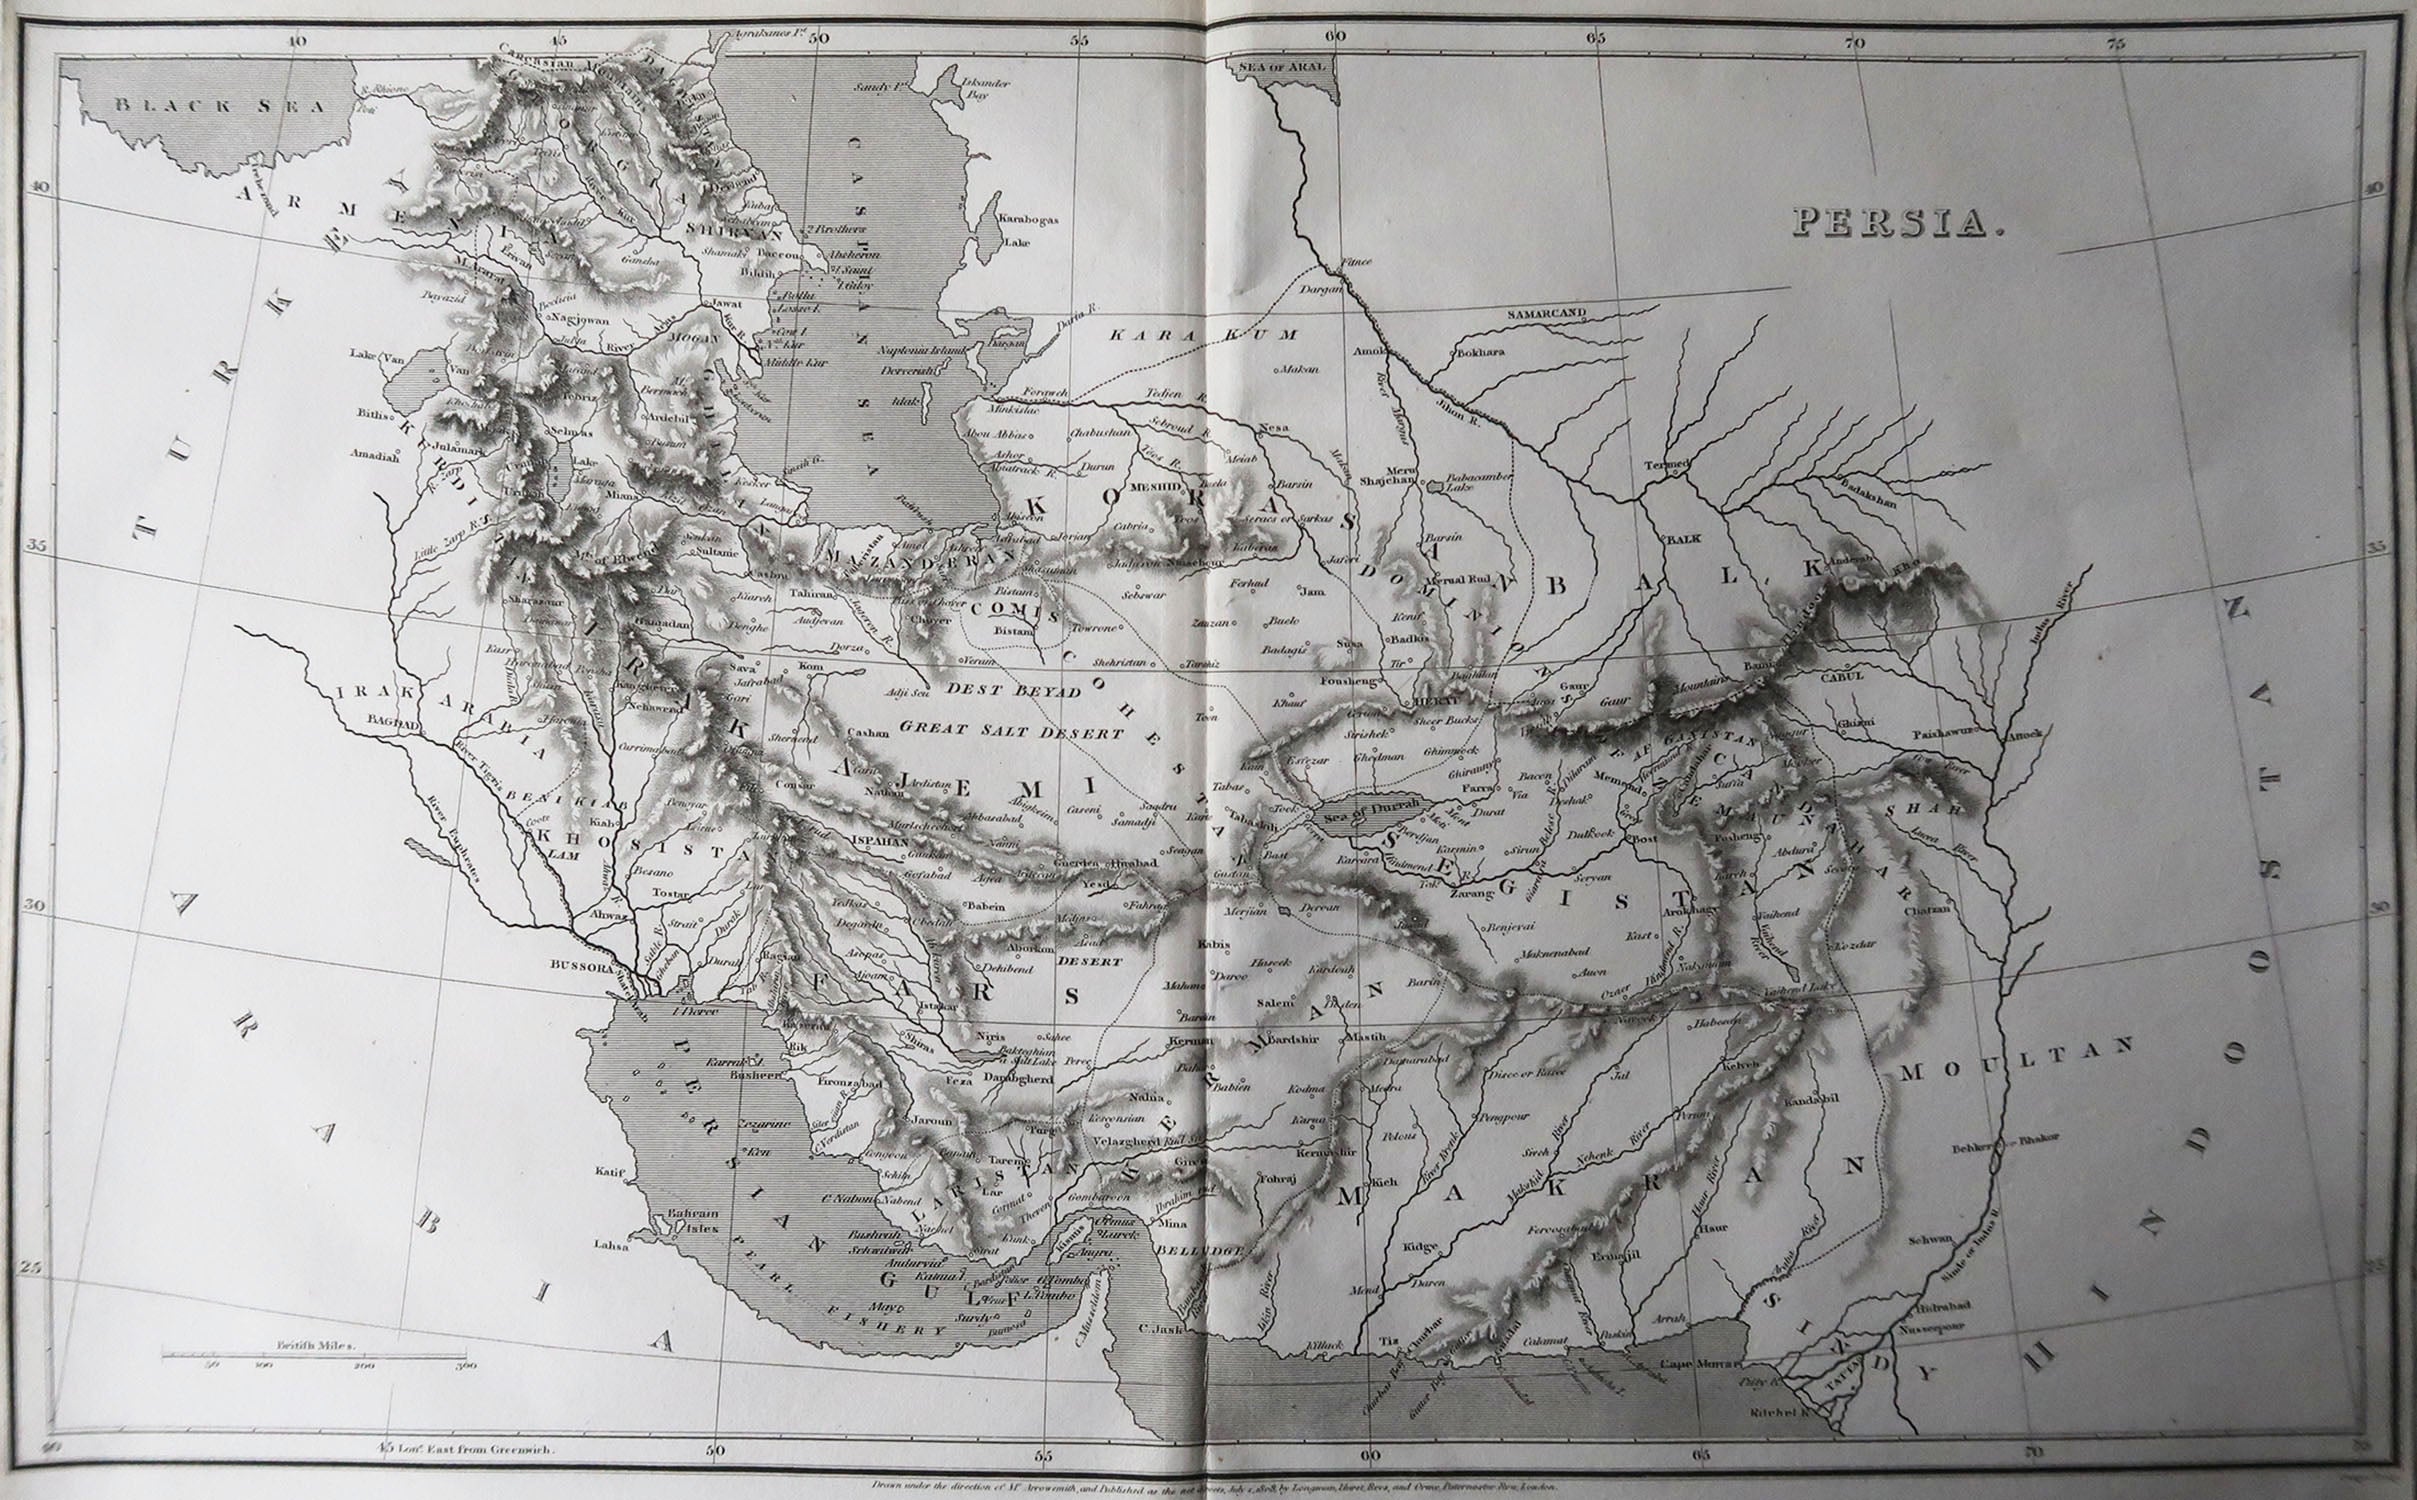 Original Antique Map of Persia / Iran, Arrowsmith, 1820